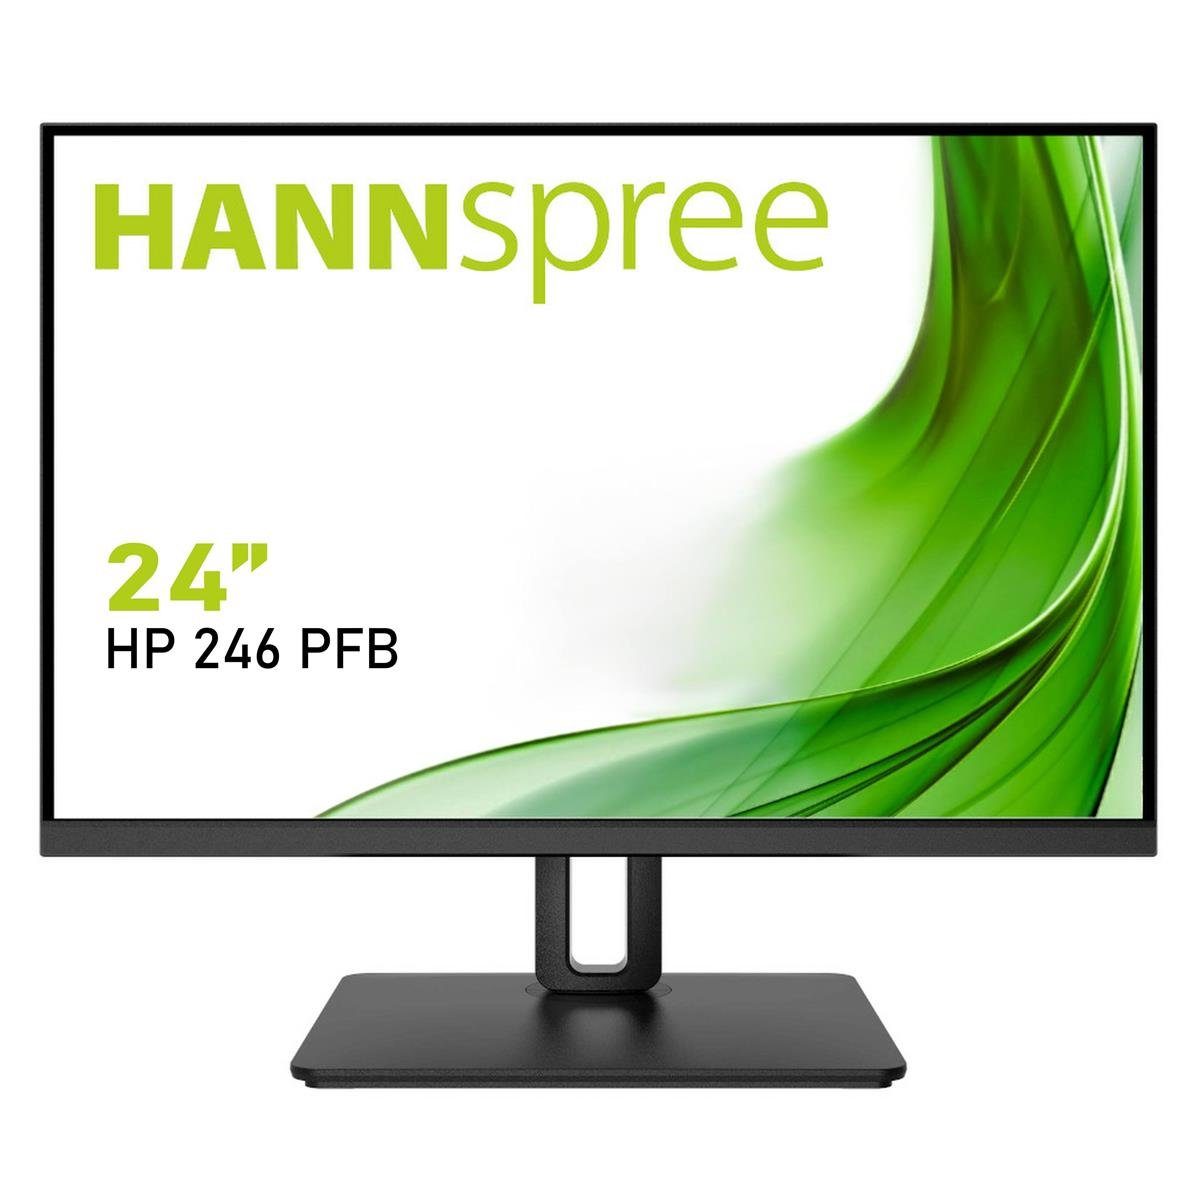 Hannspree HANNspree HP246PFB Monitor 61,0 cm (24,0 Zoll) schwarz Netzwerk-Adapter